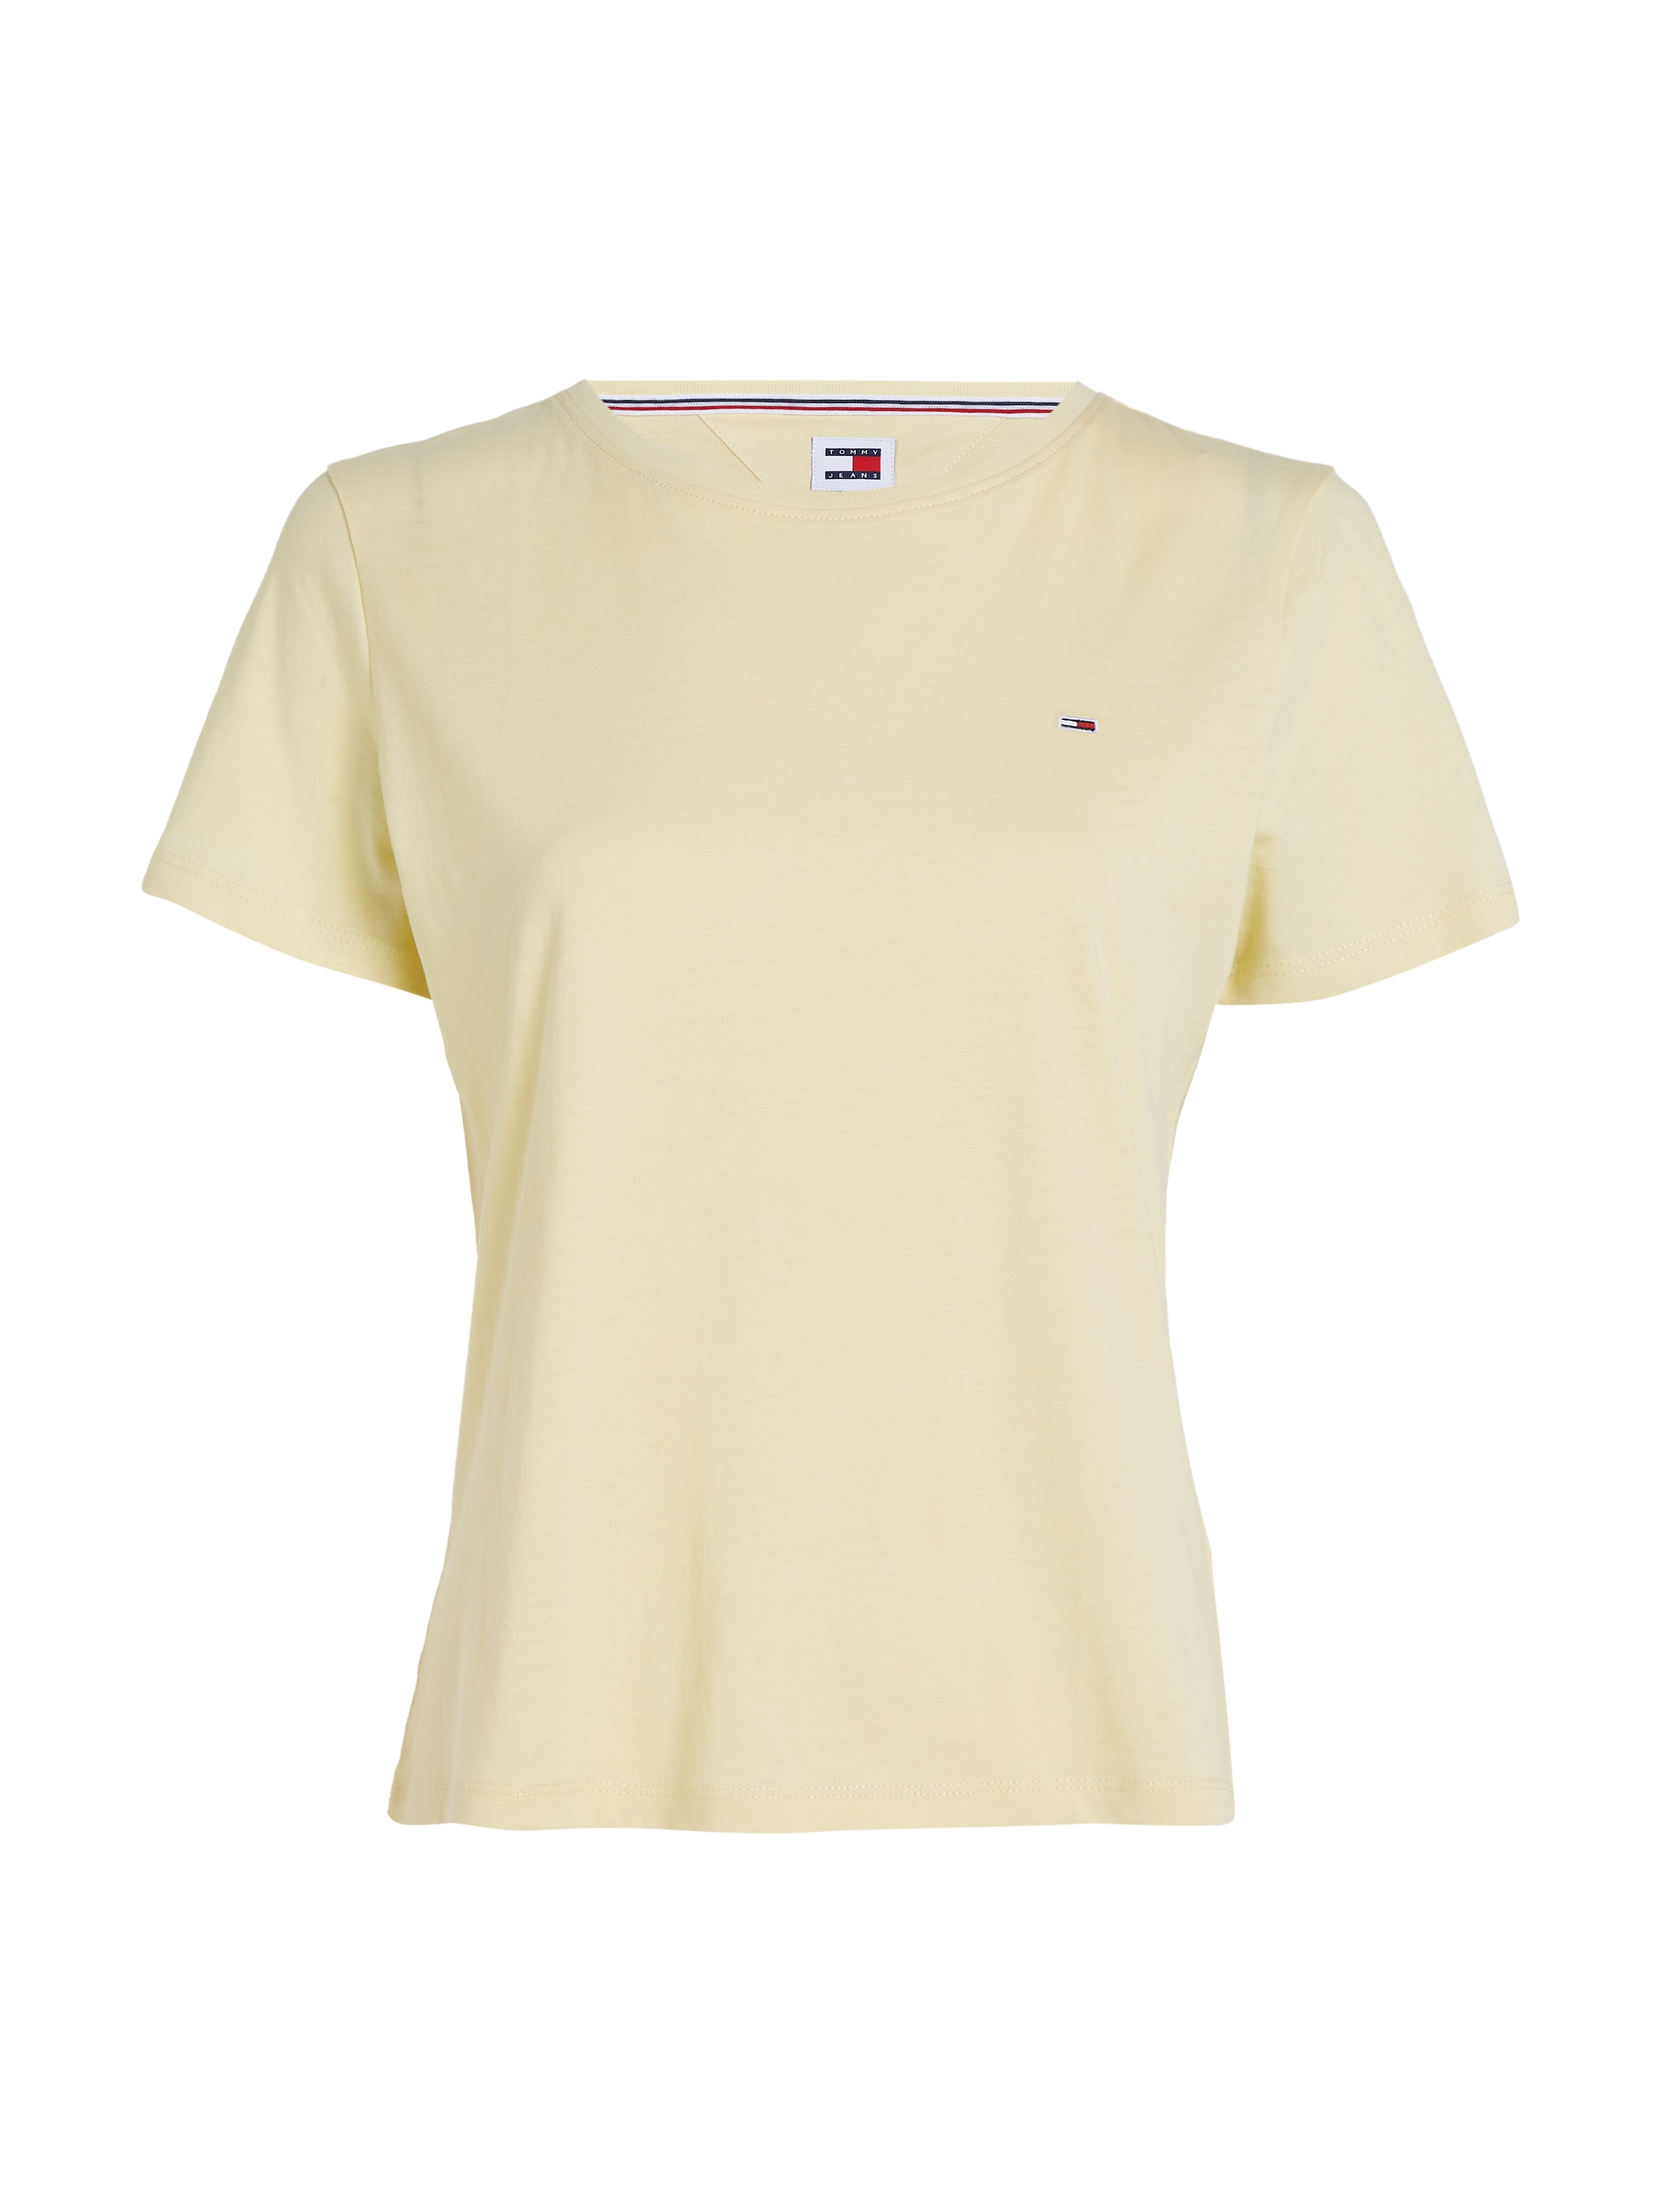 Tommy Jeans T-Shirt »Soft Jersey T Shirt«, aus weicher Jersey Qualität Rundhals Kurzarm